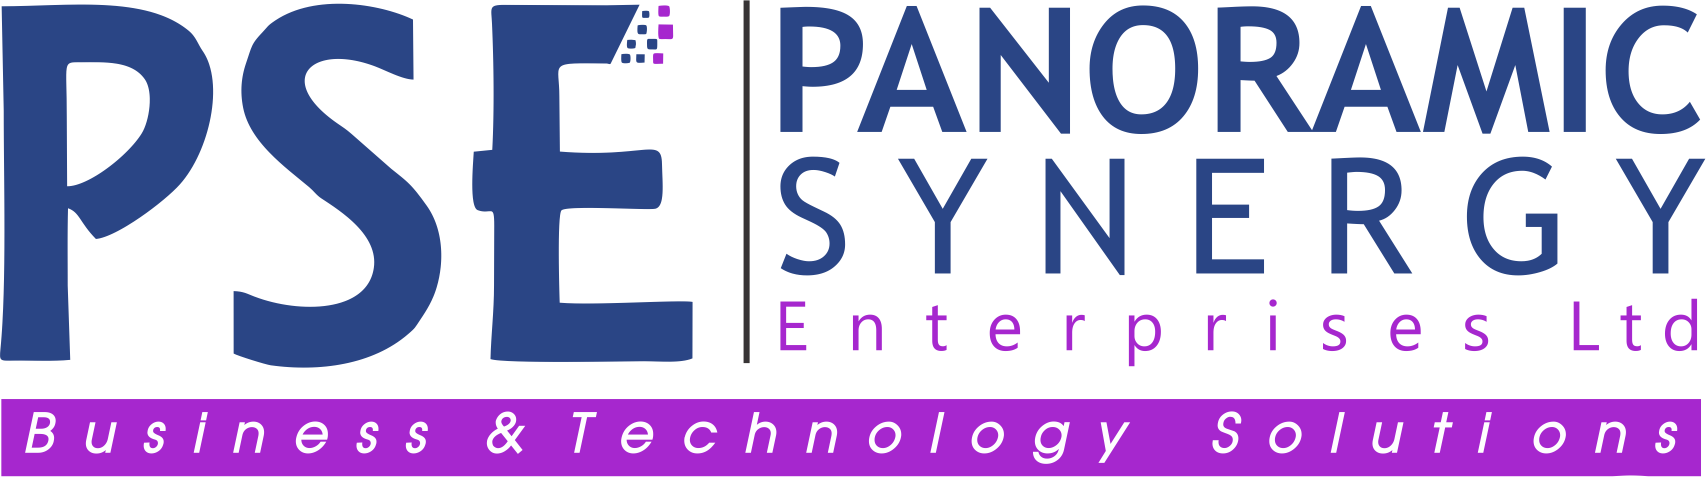 Panoramic Synergy Enterprises (PSE) Limited